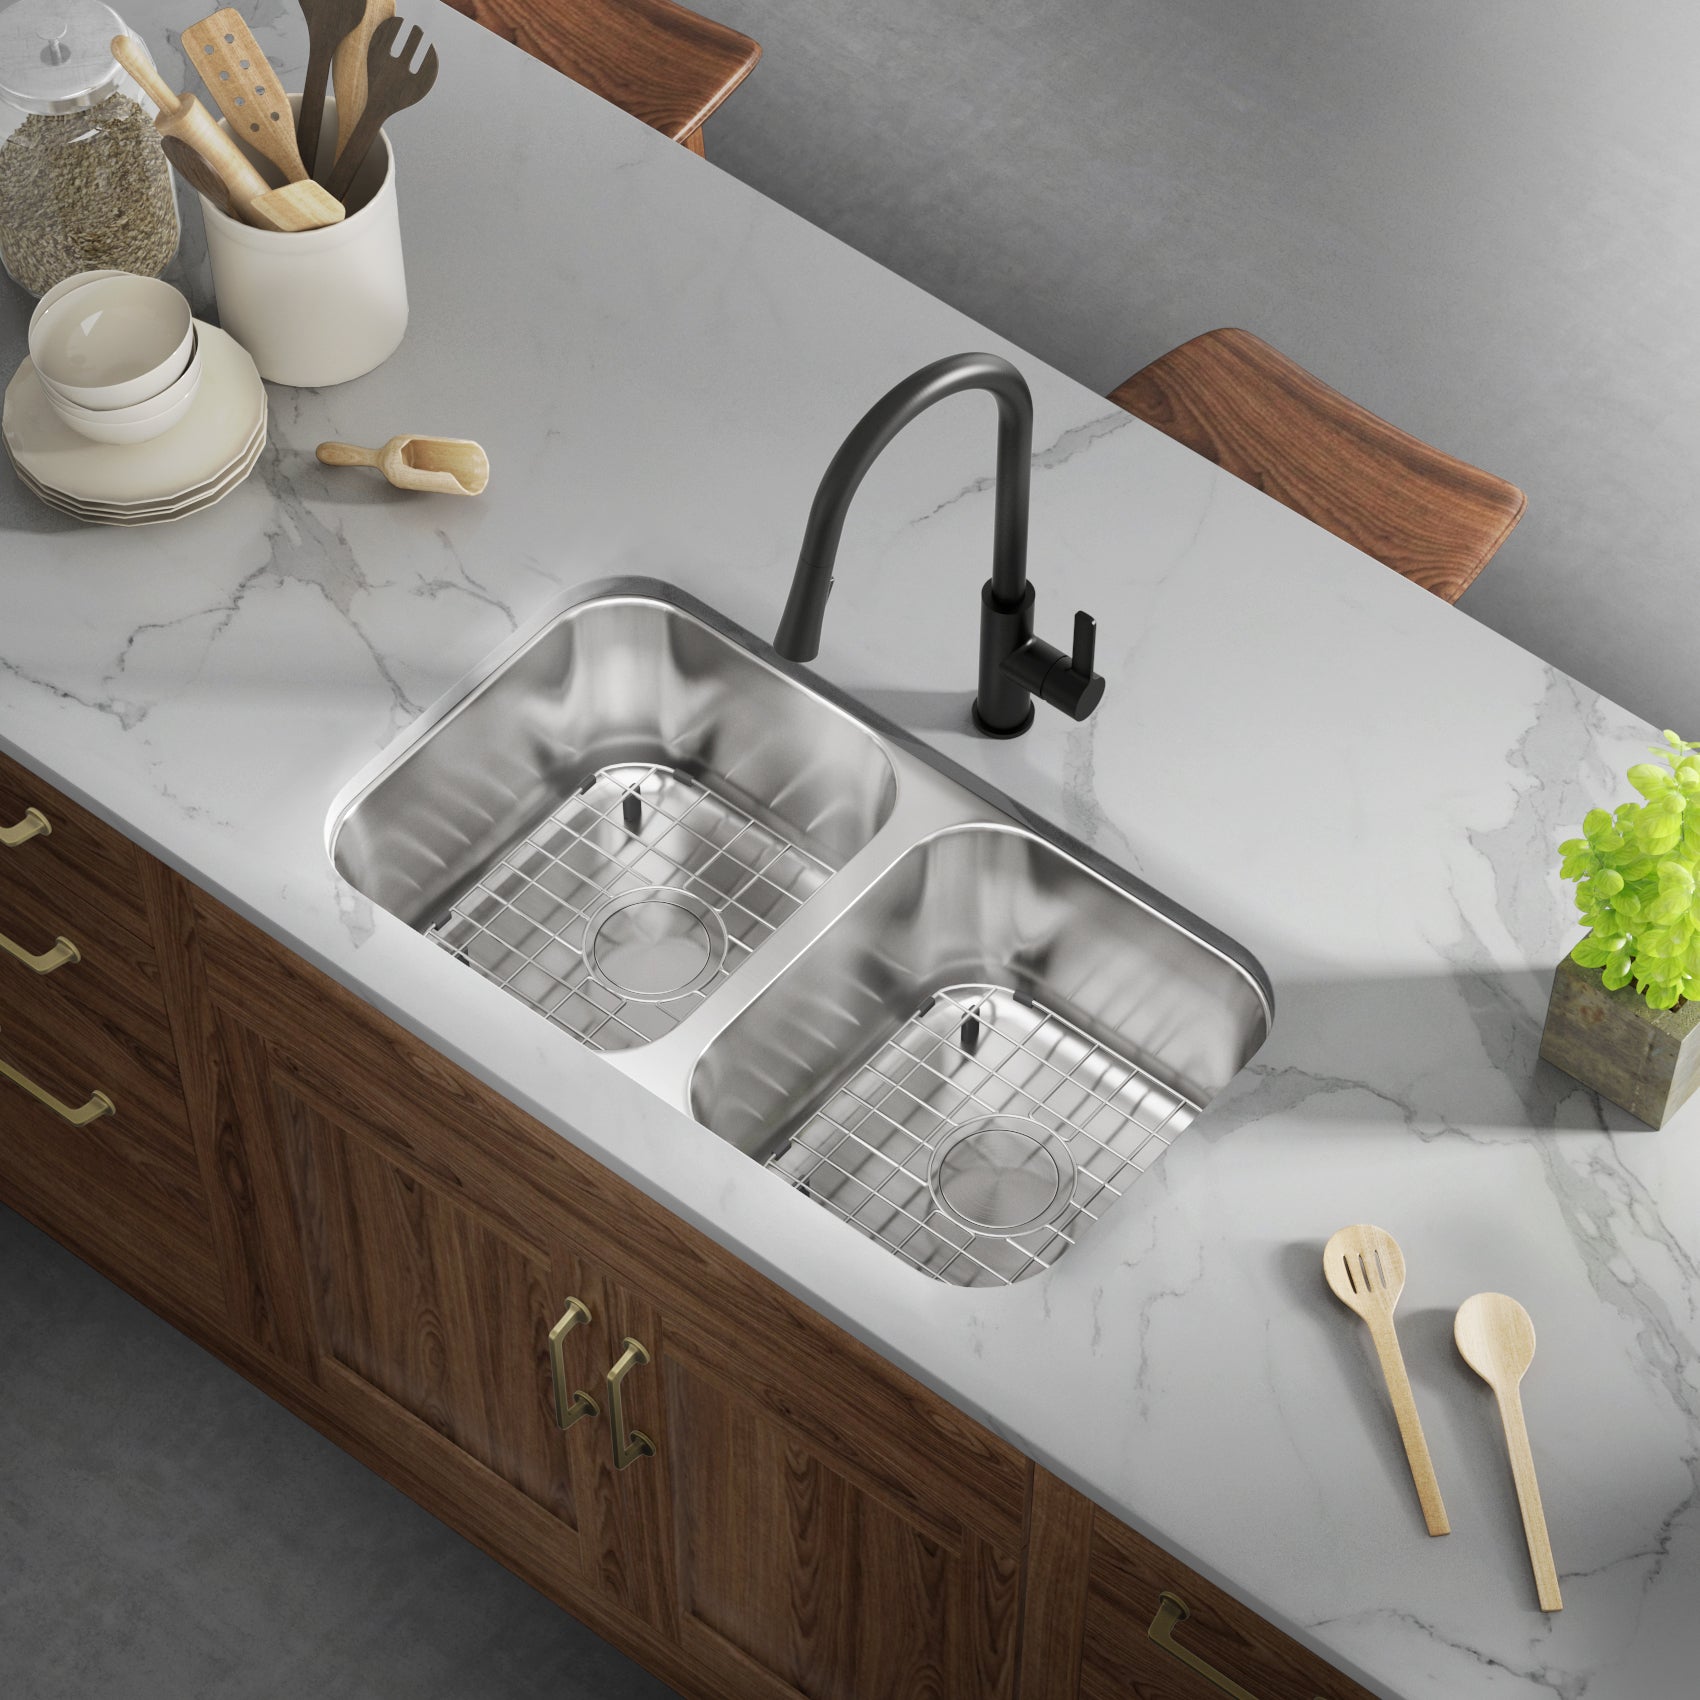 Allora Usa Ksn 3118 16 31 L X 18 W Double Basin Undermount Kitchen Sink With Basket Strainer Stainless Steel Thickness Gauge